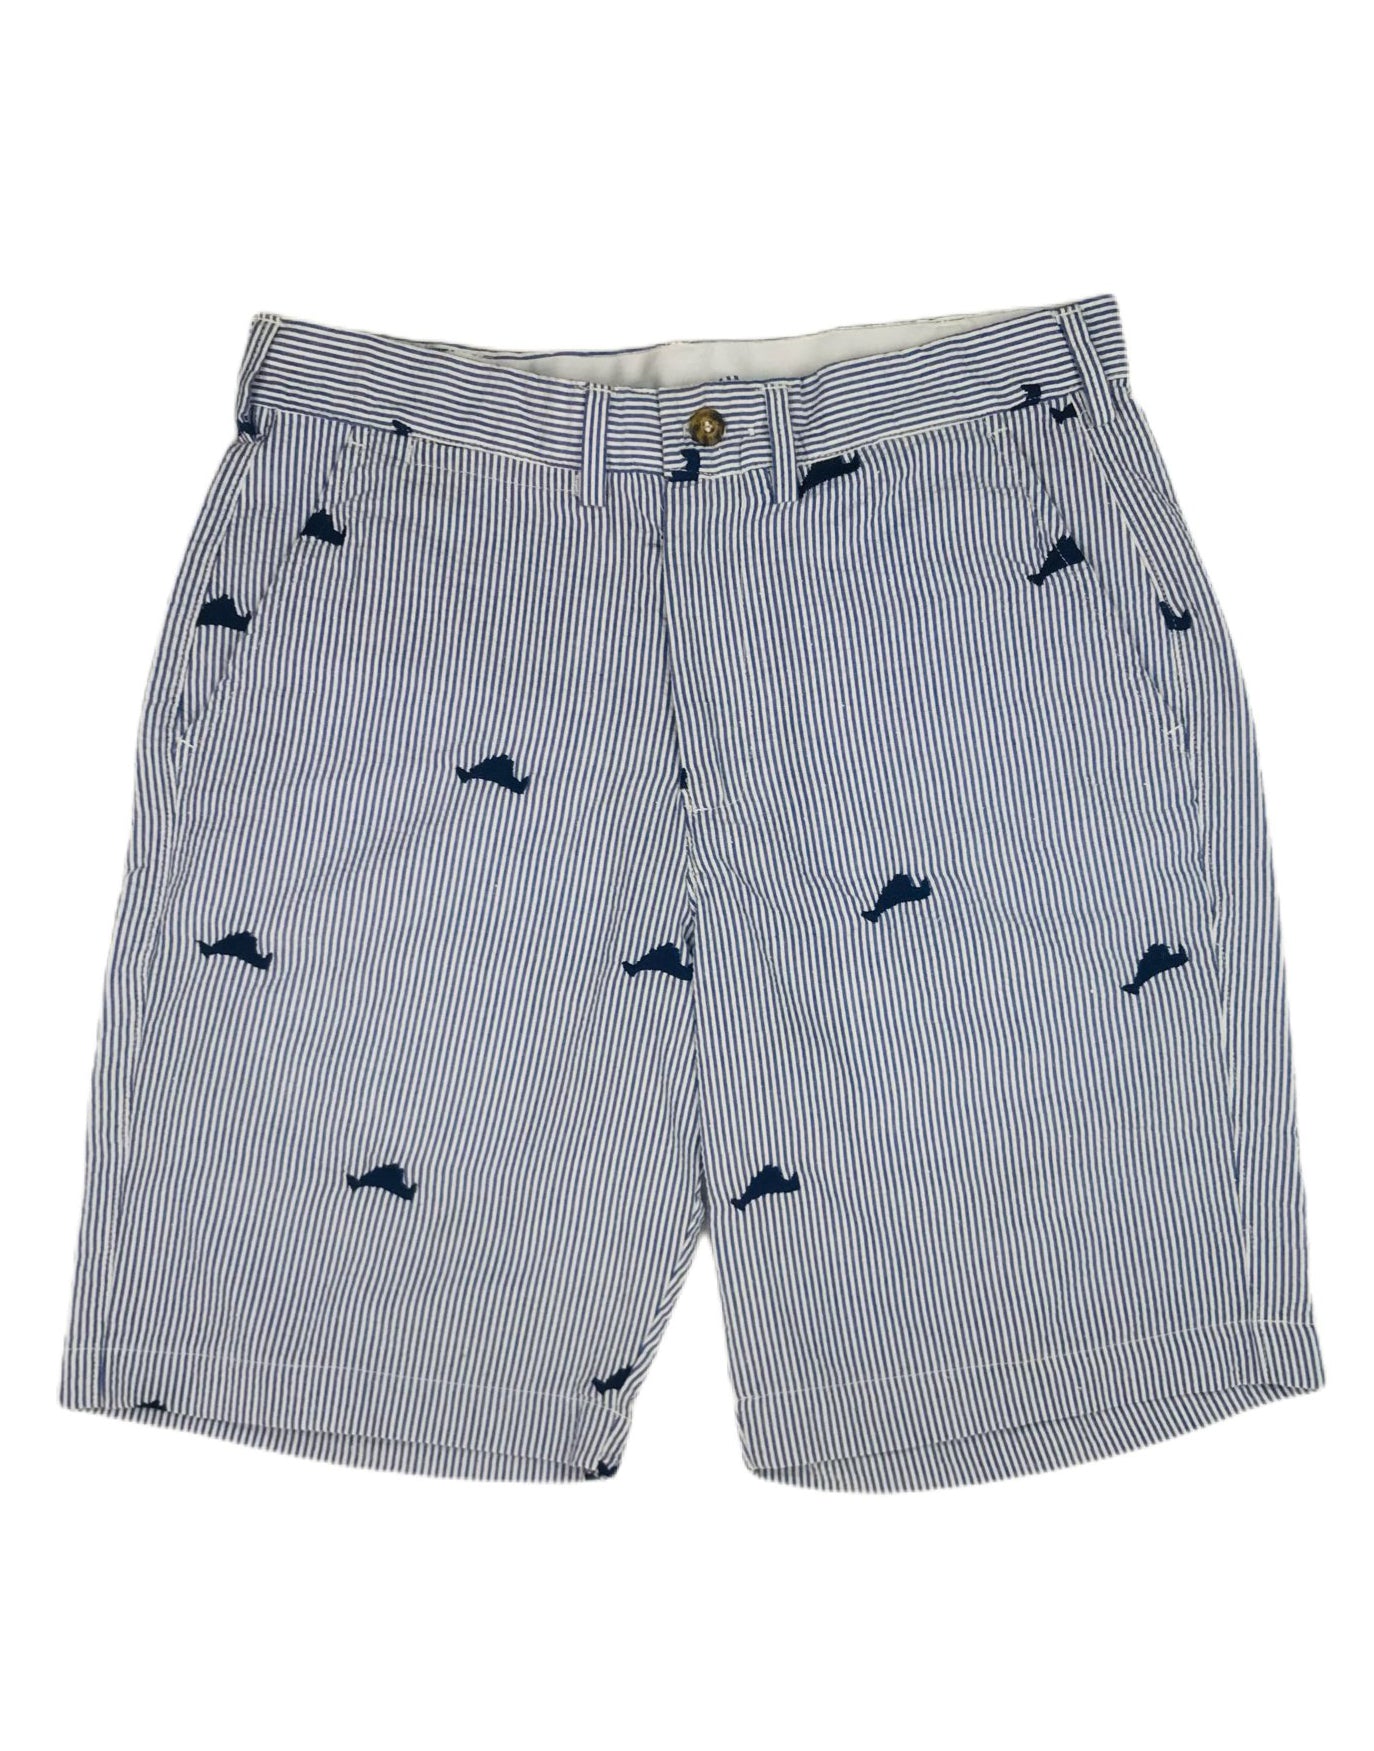 Blue Mens Seersucker Shorts with Navy Embroidered Martha's Vineyards ...